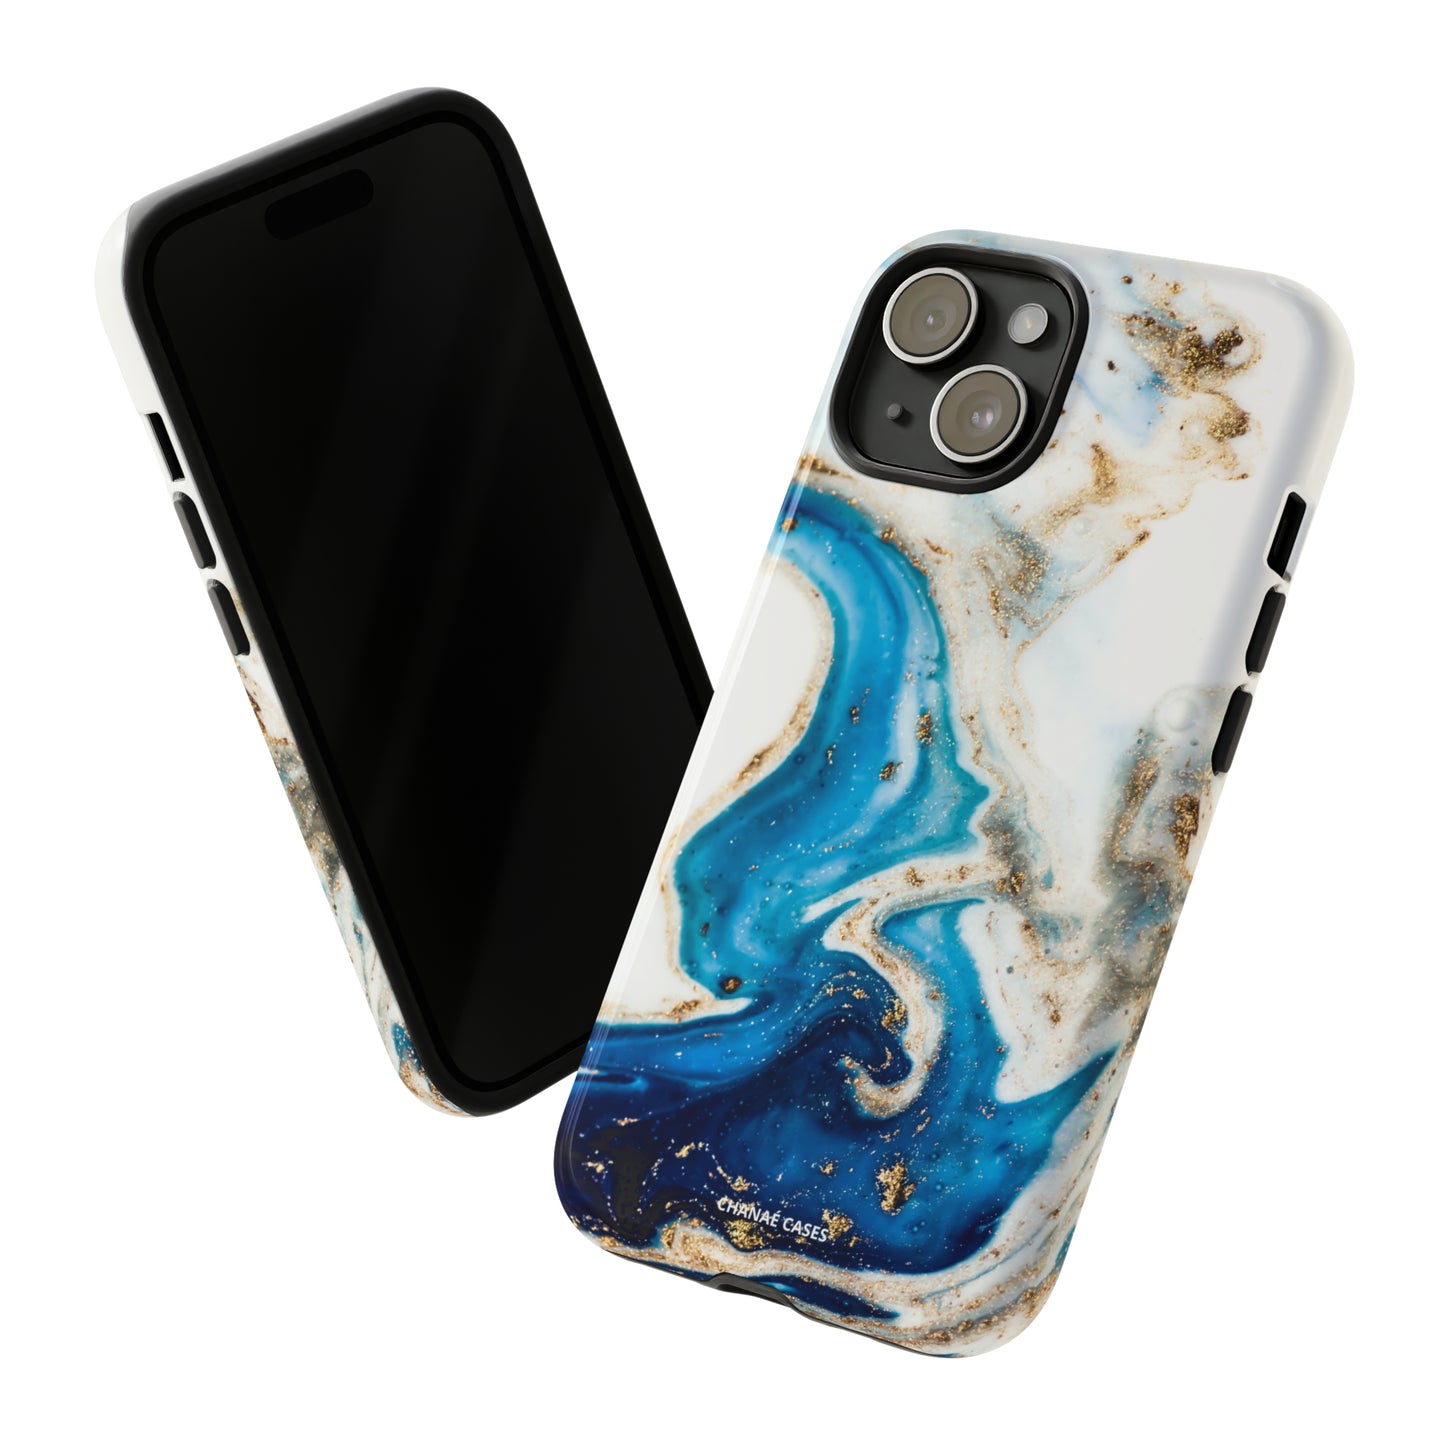 Fia Marble iPhone "Tough" Case